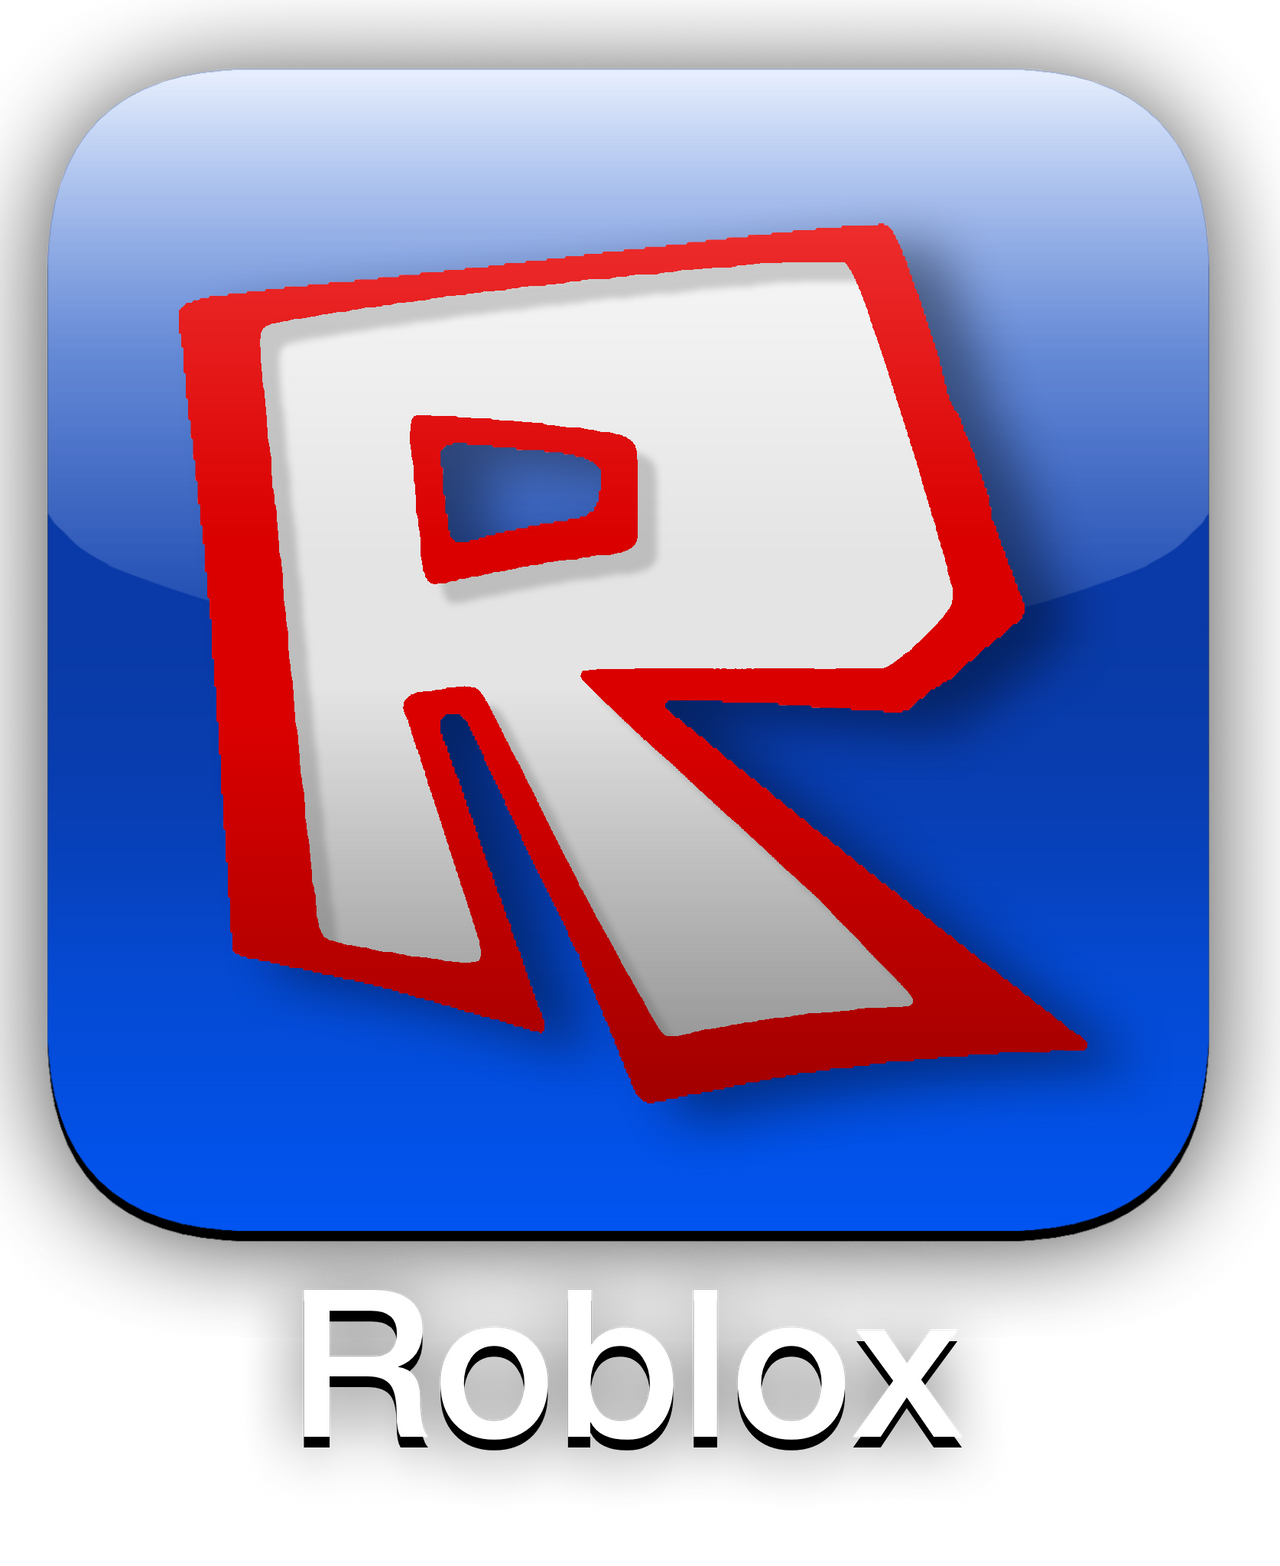 ios 6 Roblox icon by Goldmario82 on DeviantArt